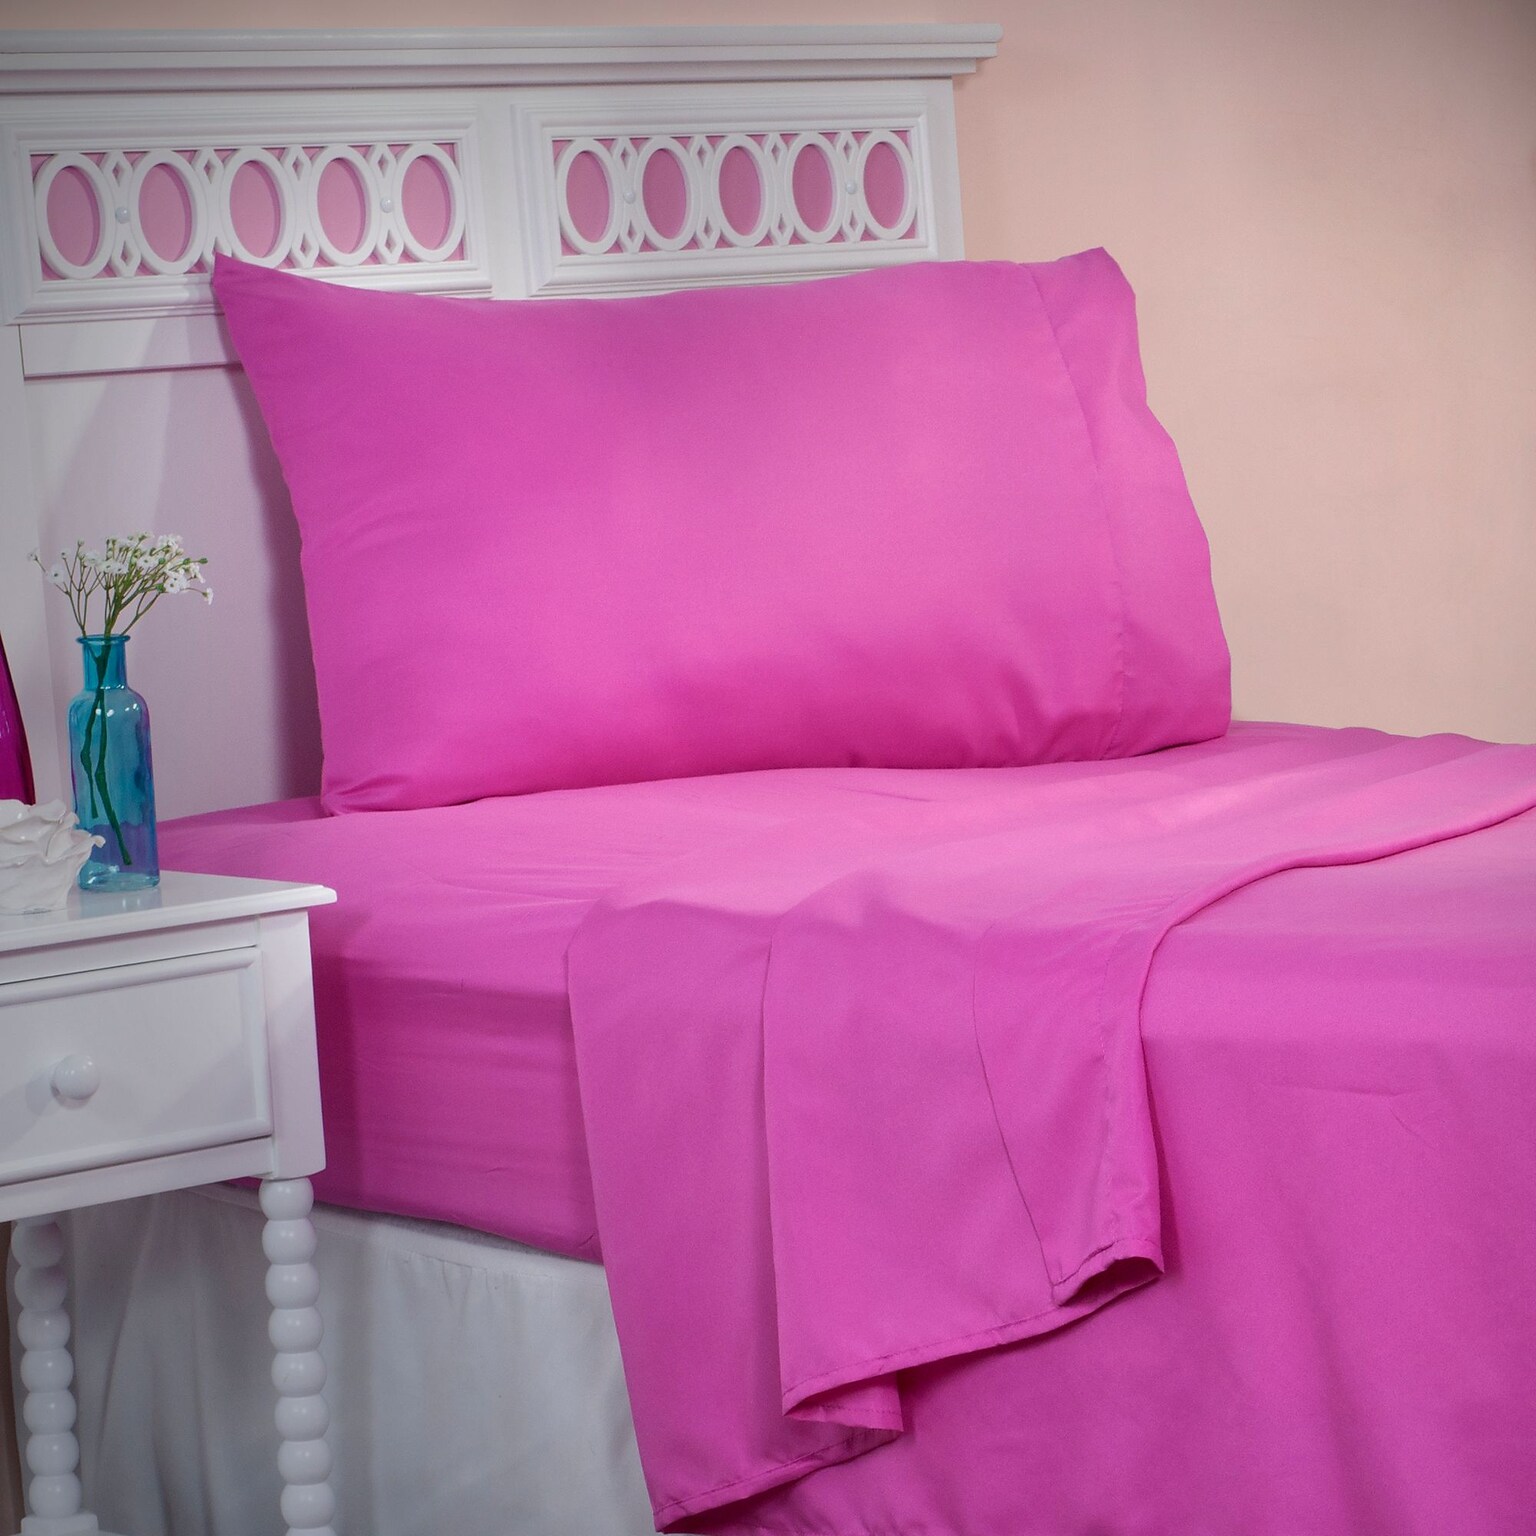 Lavish Home Series 1200 66-MF75S-T-PIN 3-Piece Pink Sheet Set, Twin, 3/Set